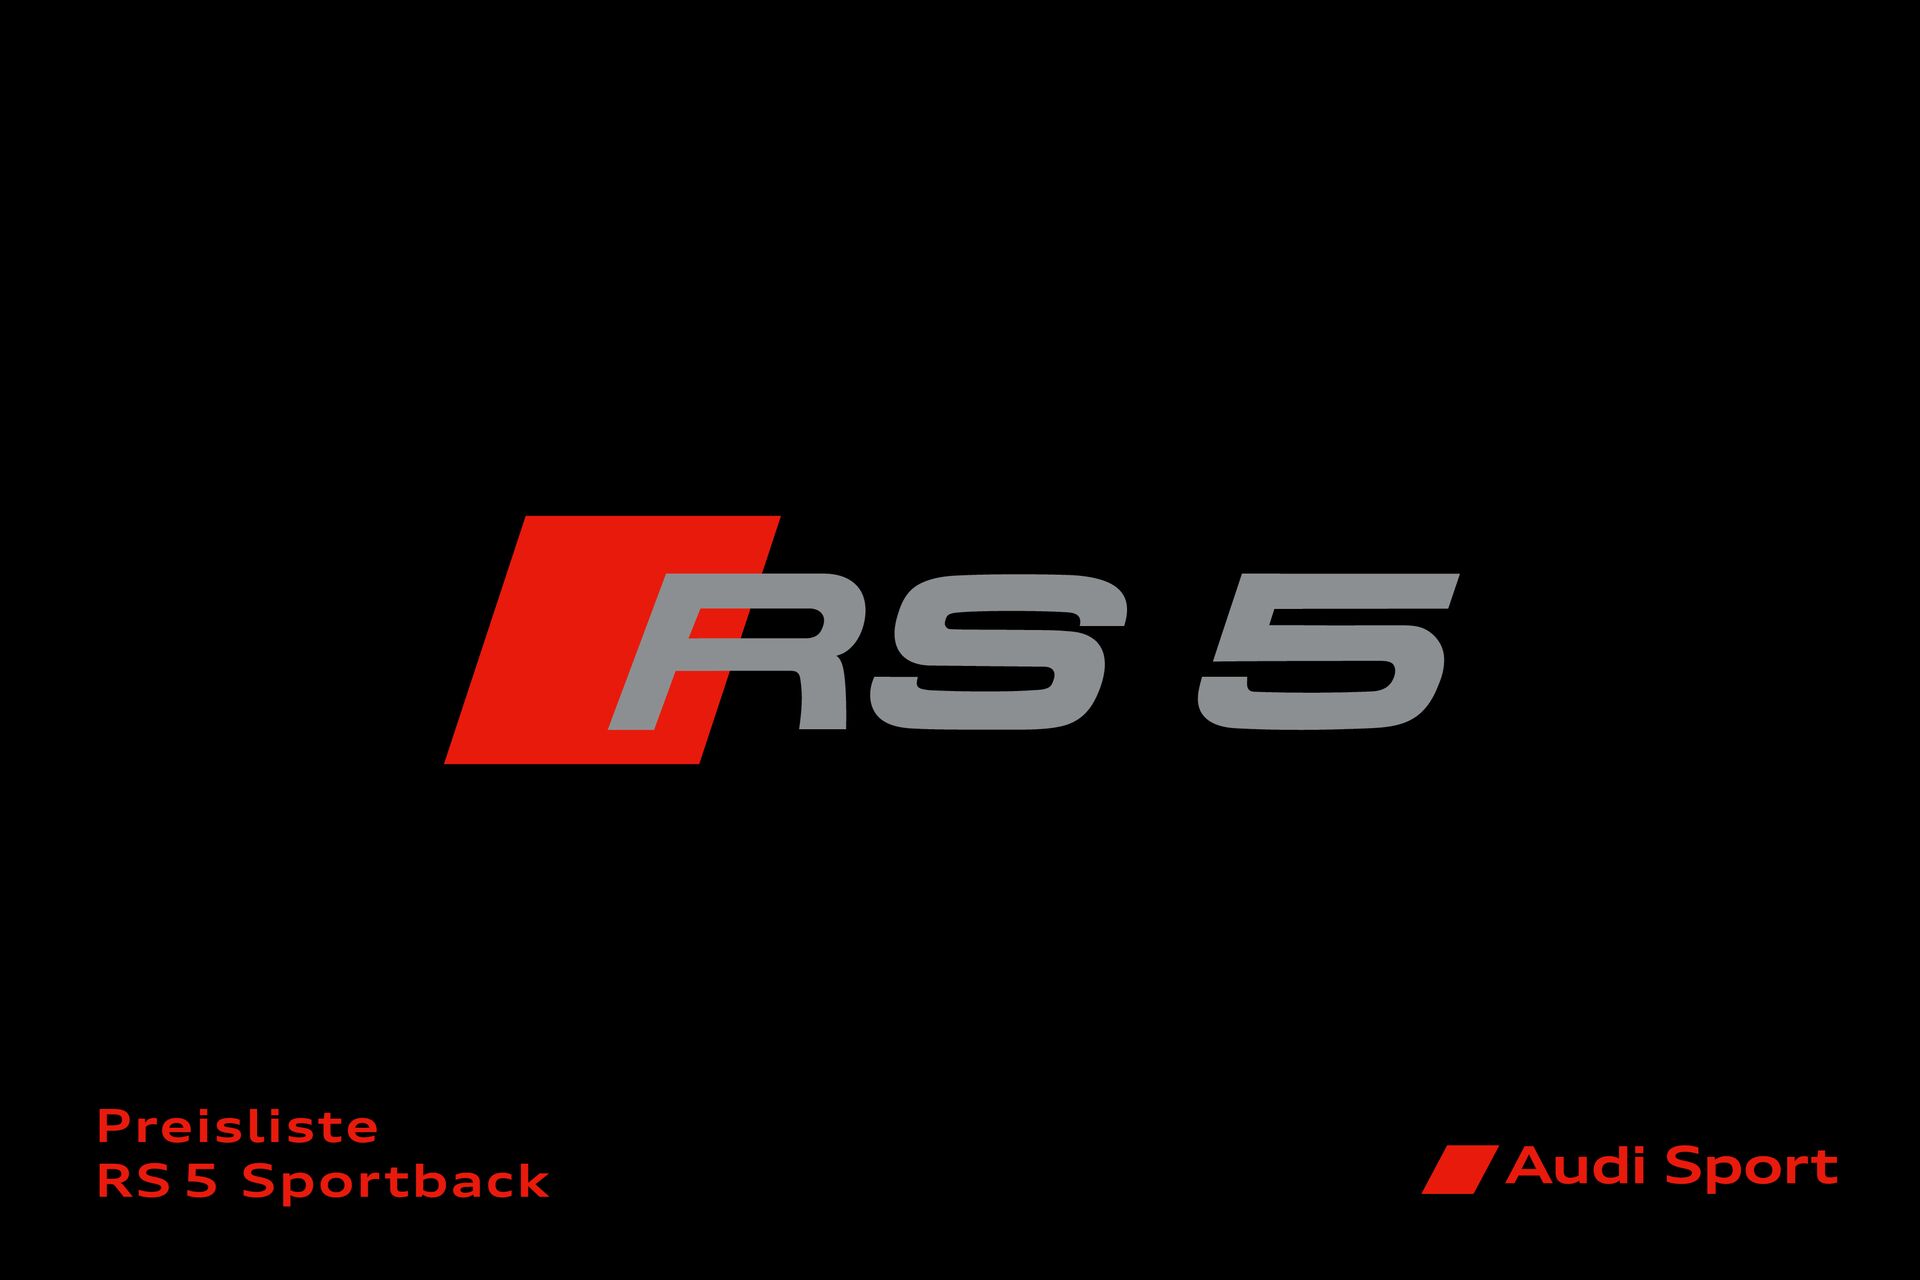 Preisliste Audi RS 5 Coupé / Audi RS 5 Sportback Modelljahr 2024